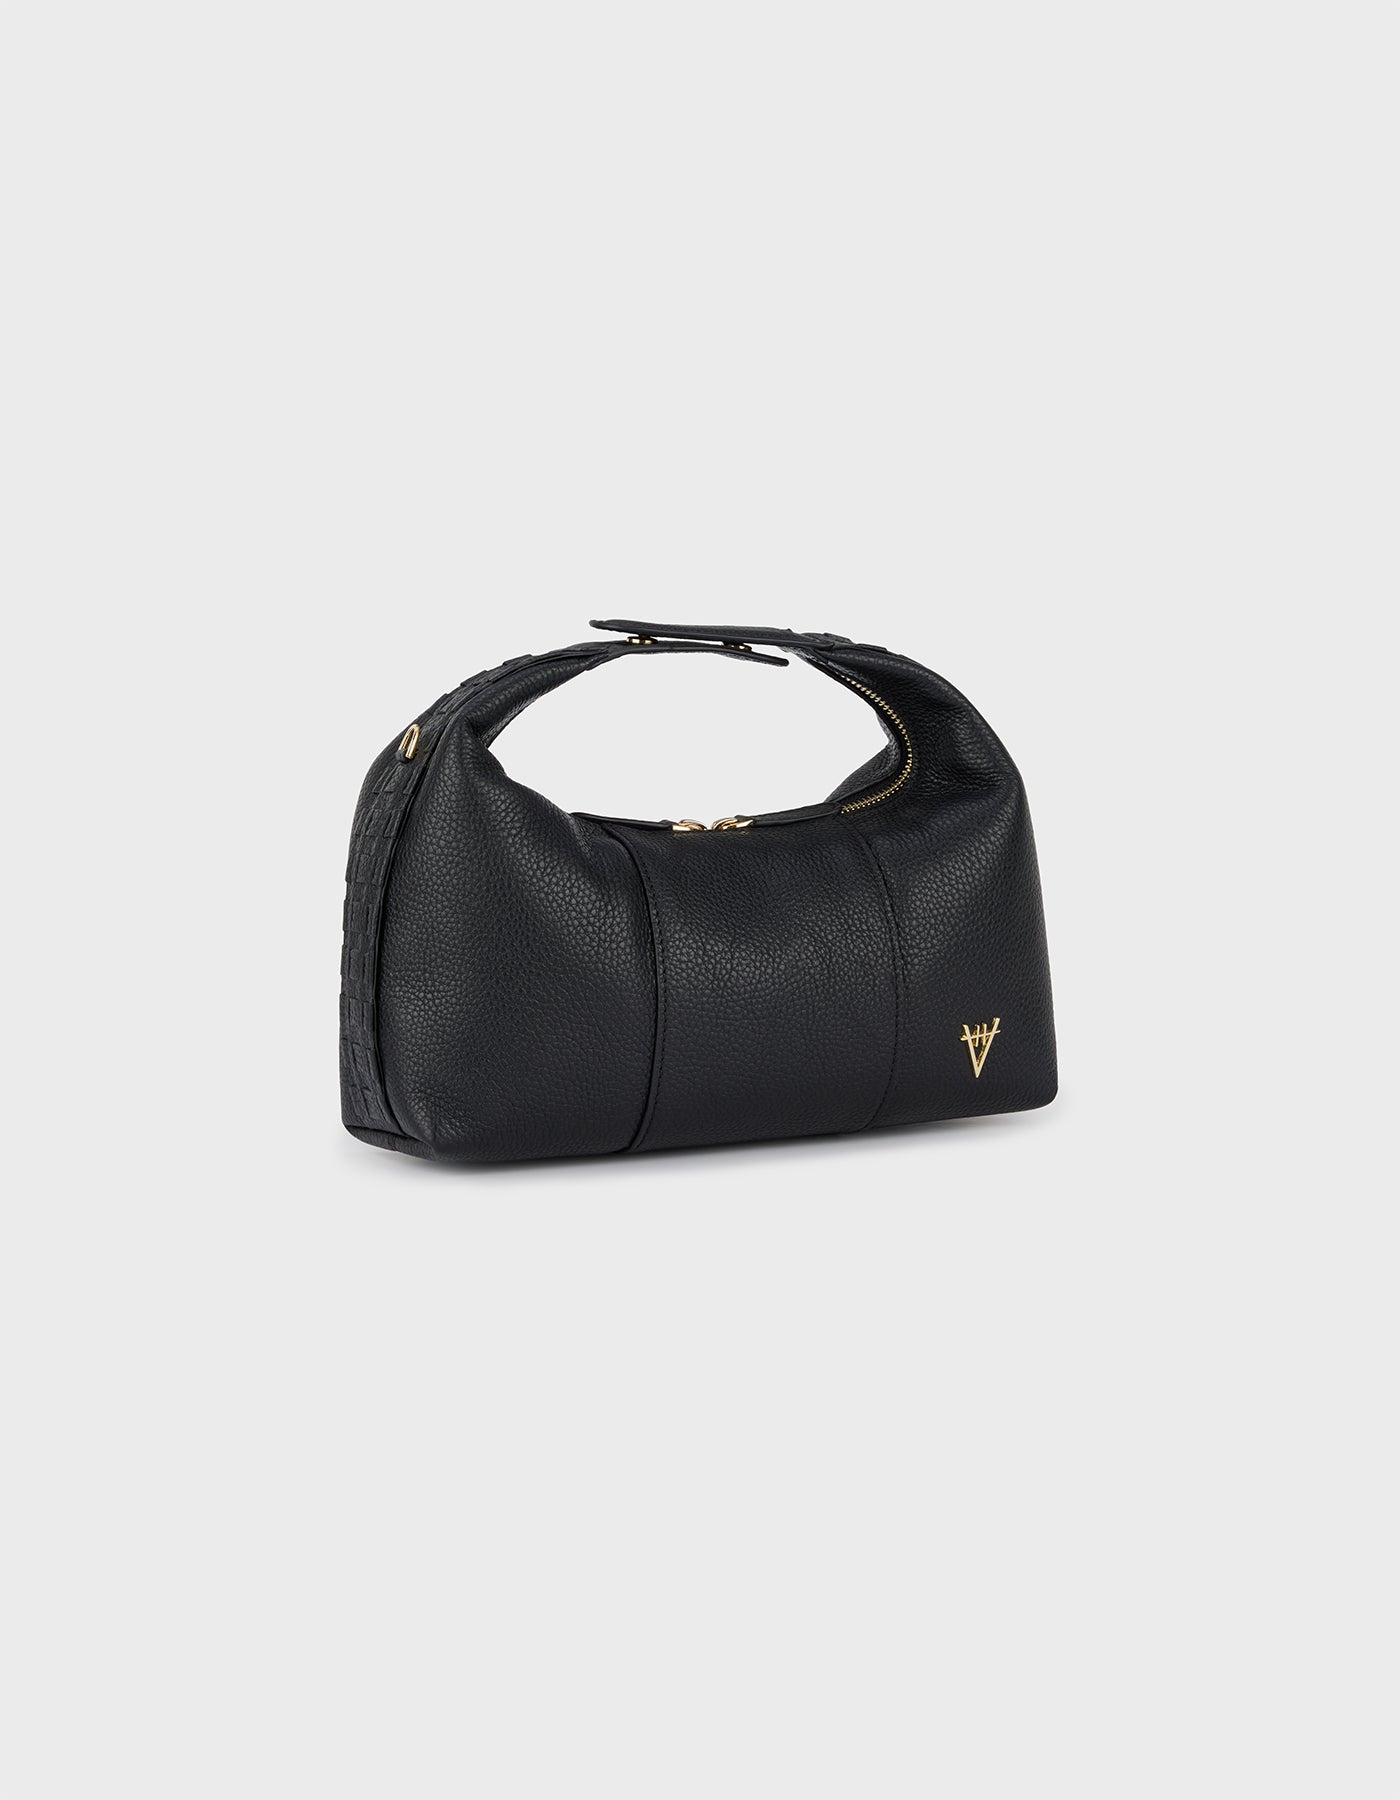 HiVa Atelier | Midi Croissant Bag Black | Beautiful and Versatile